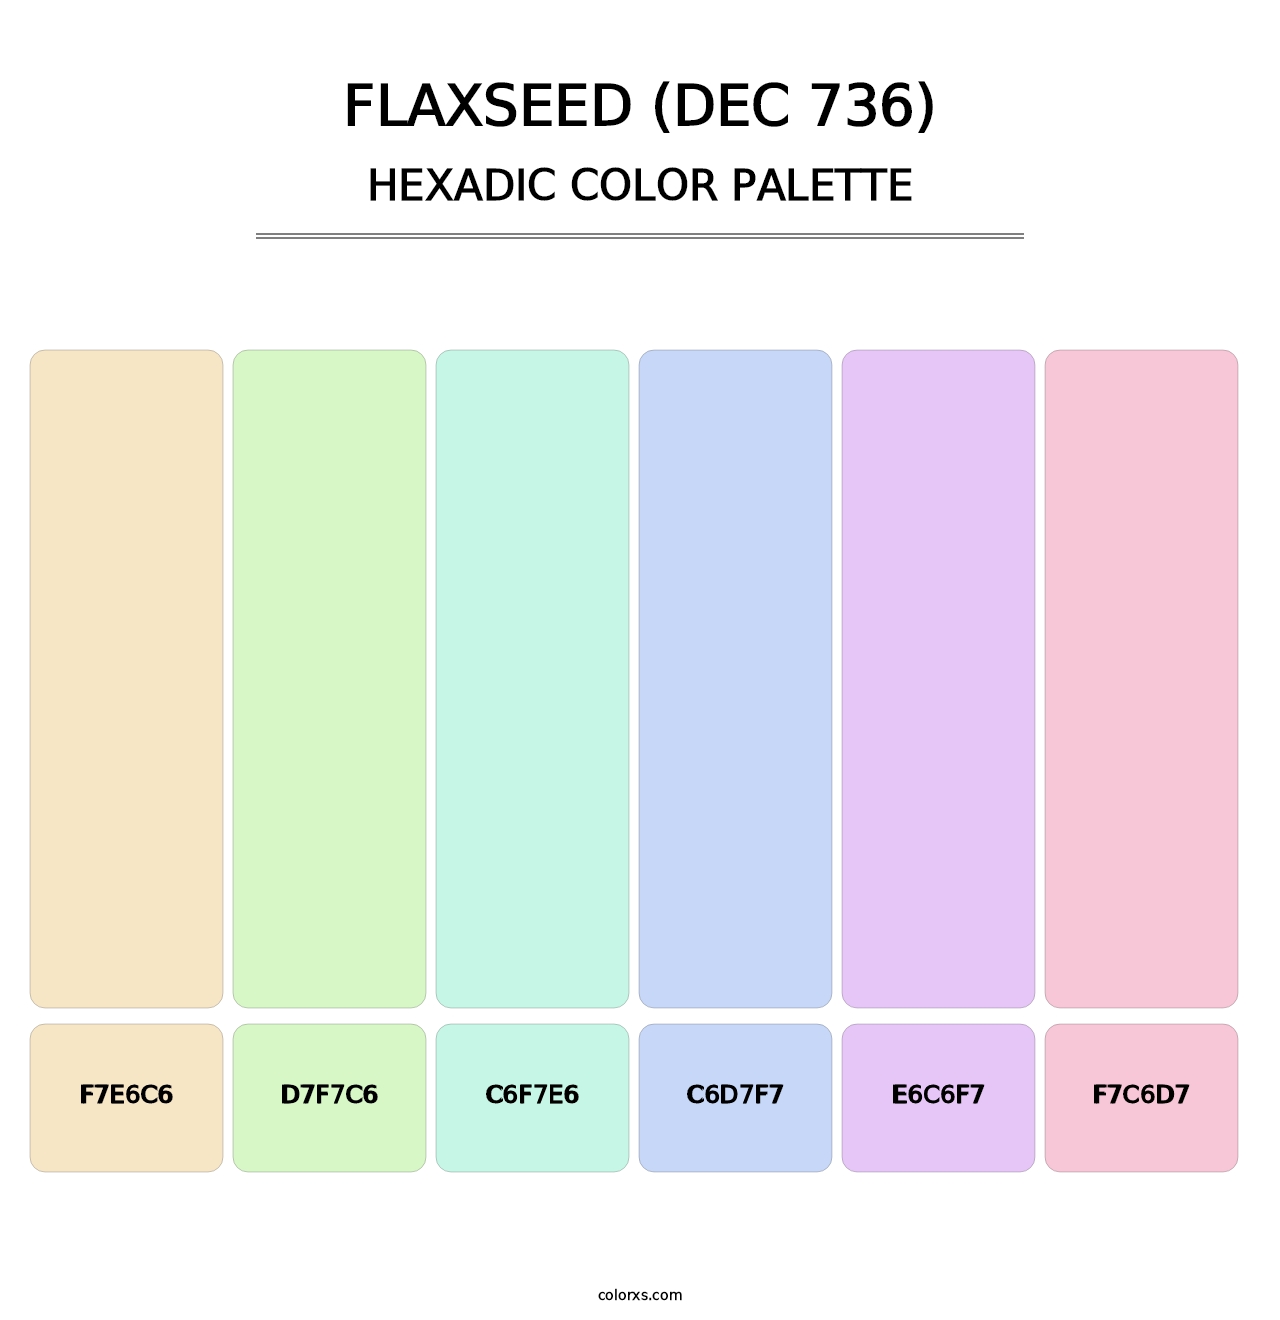 Flaxseed (DEC 736) - Hexadic Color Palette